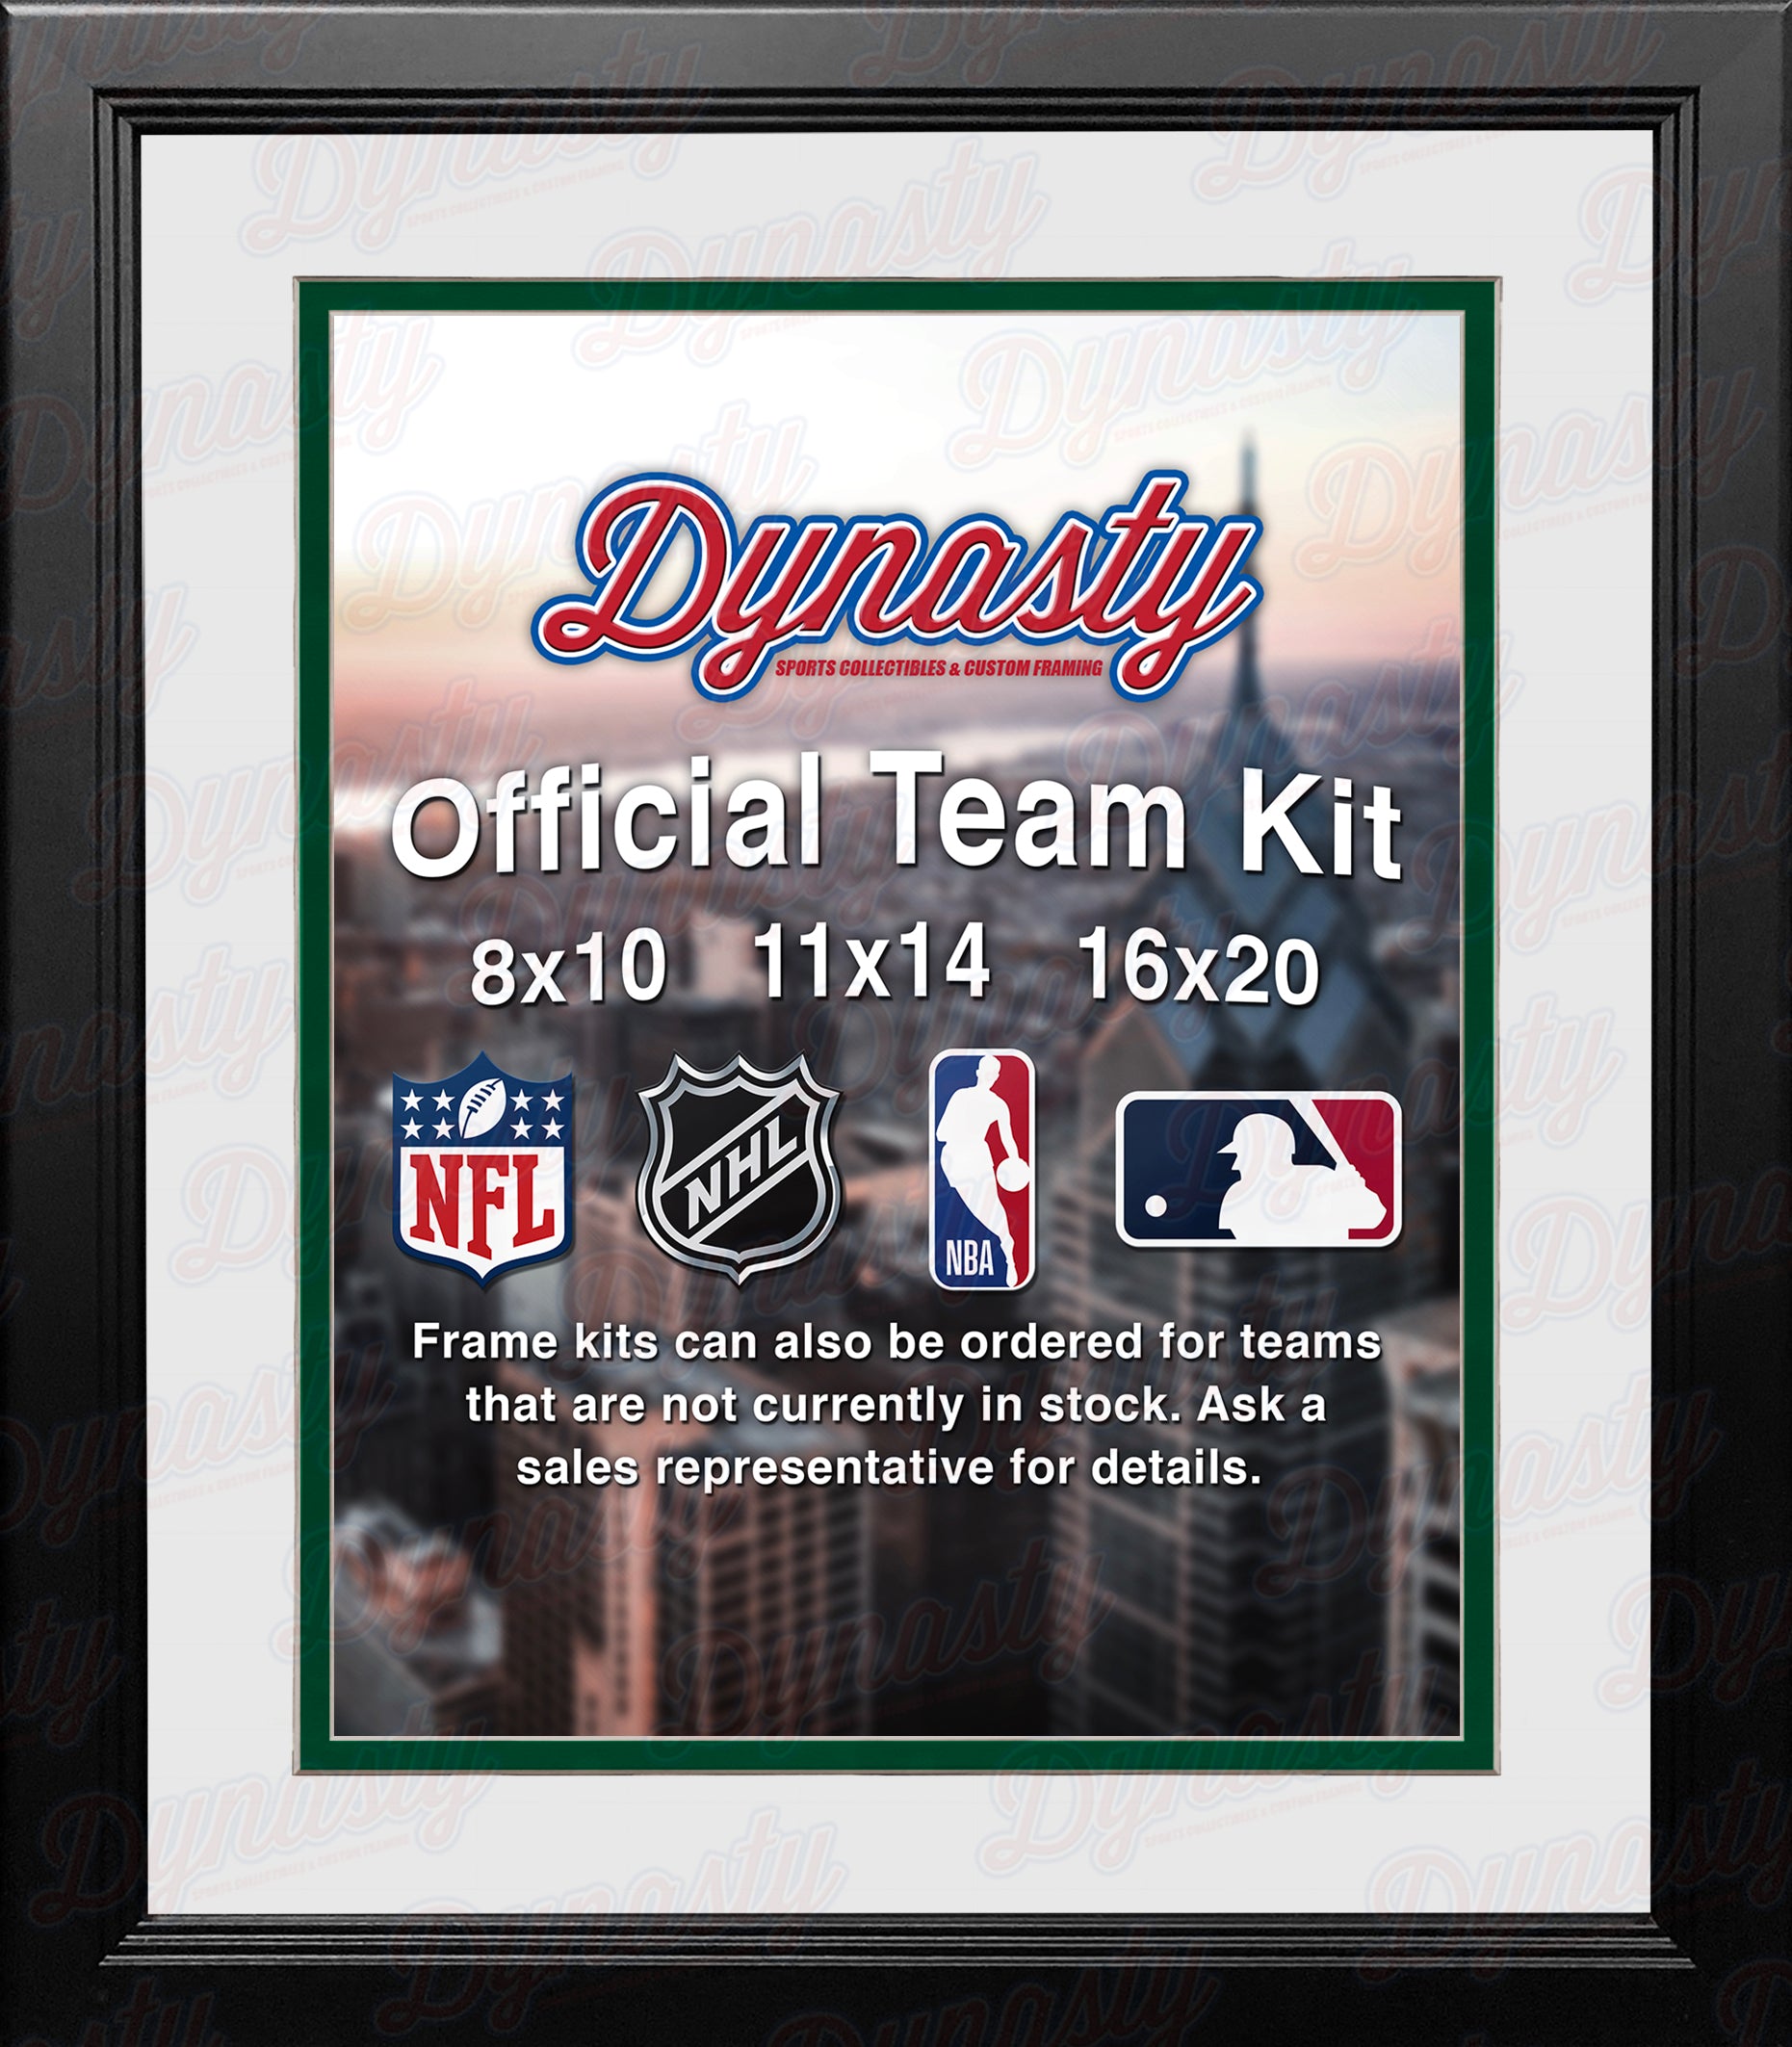 MLB Baseball Photo Picture Frame Kit - Oakland Athletics (White Matting, Green Trim) - Dynasty Sports & Framing 